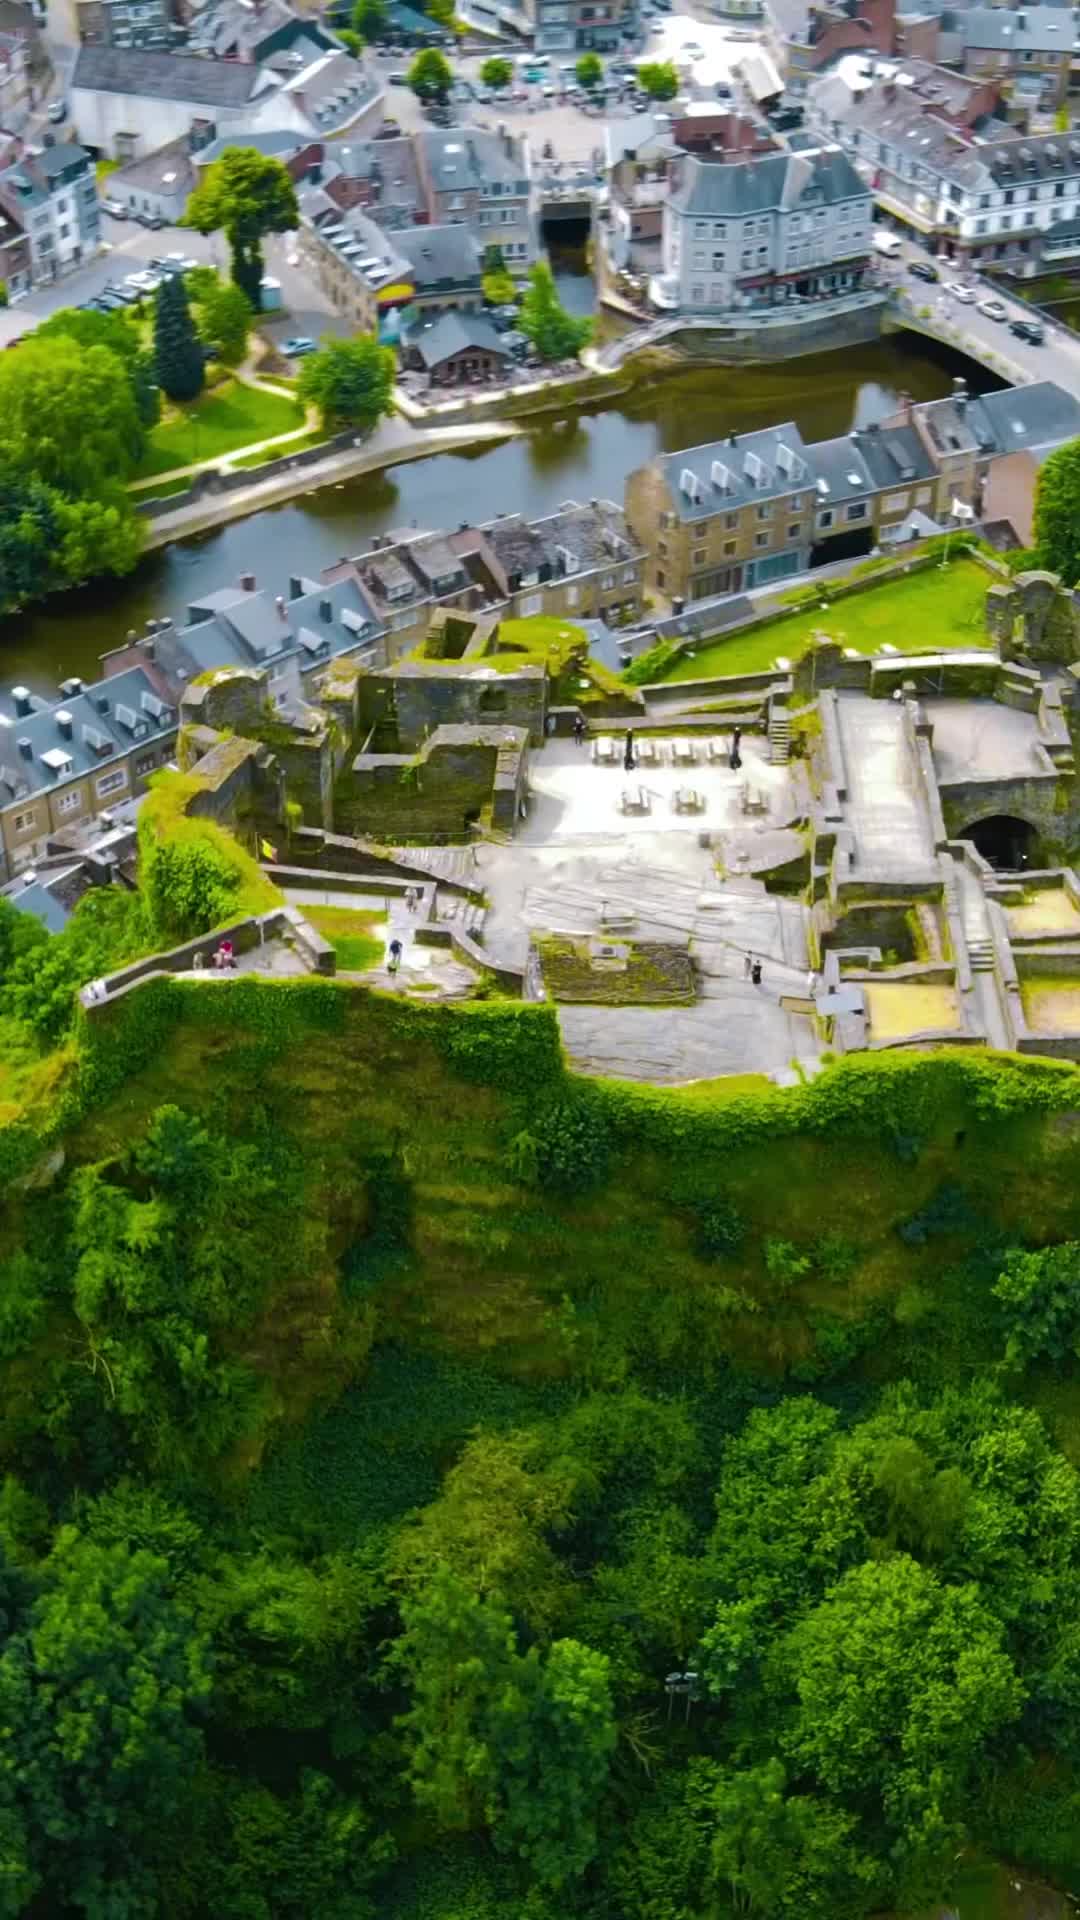 La Roche-en-Ardenne Castle: Medieval Ruins in Belgium